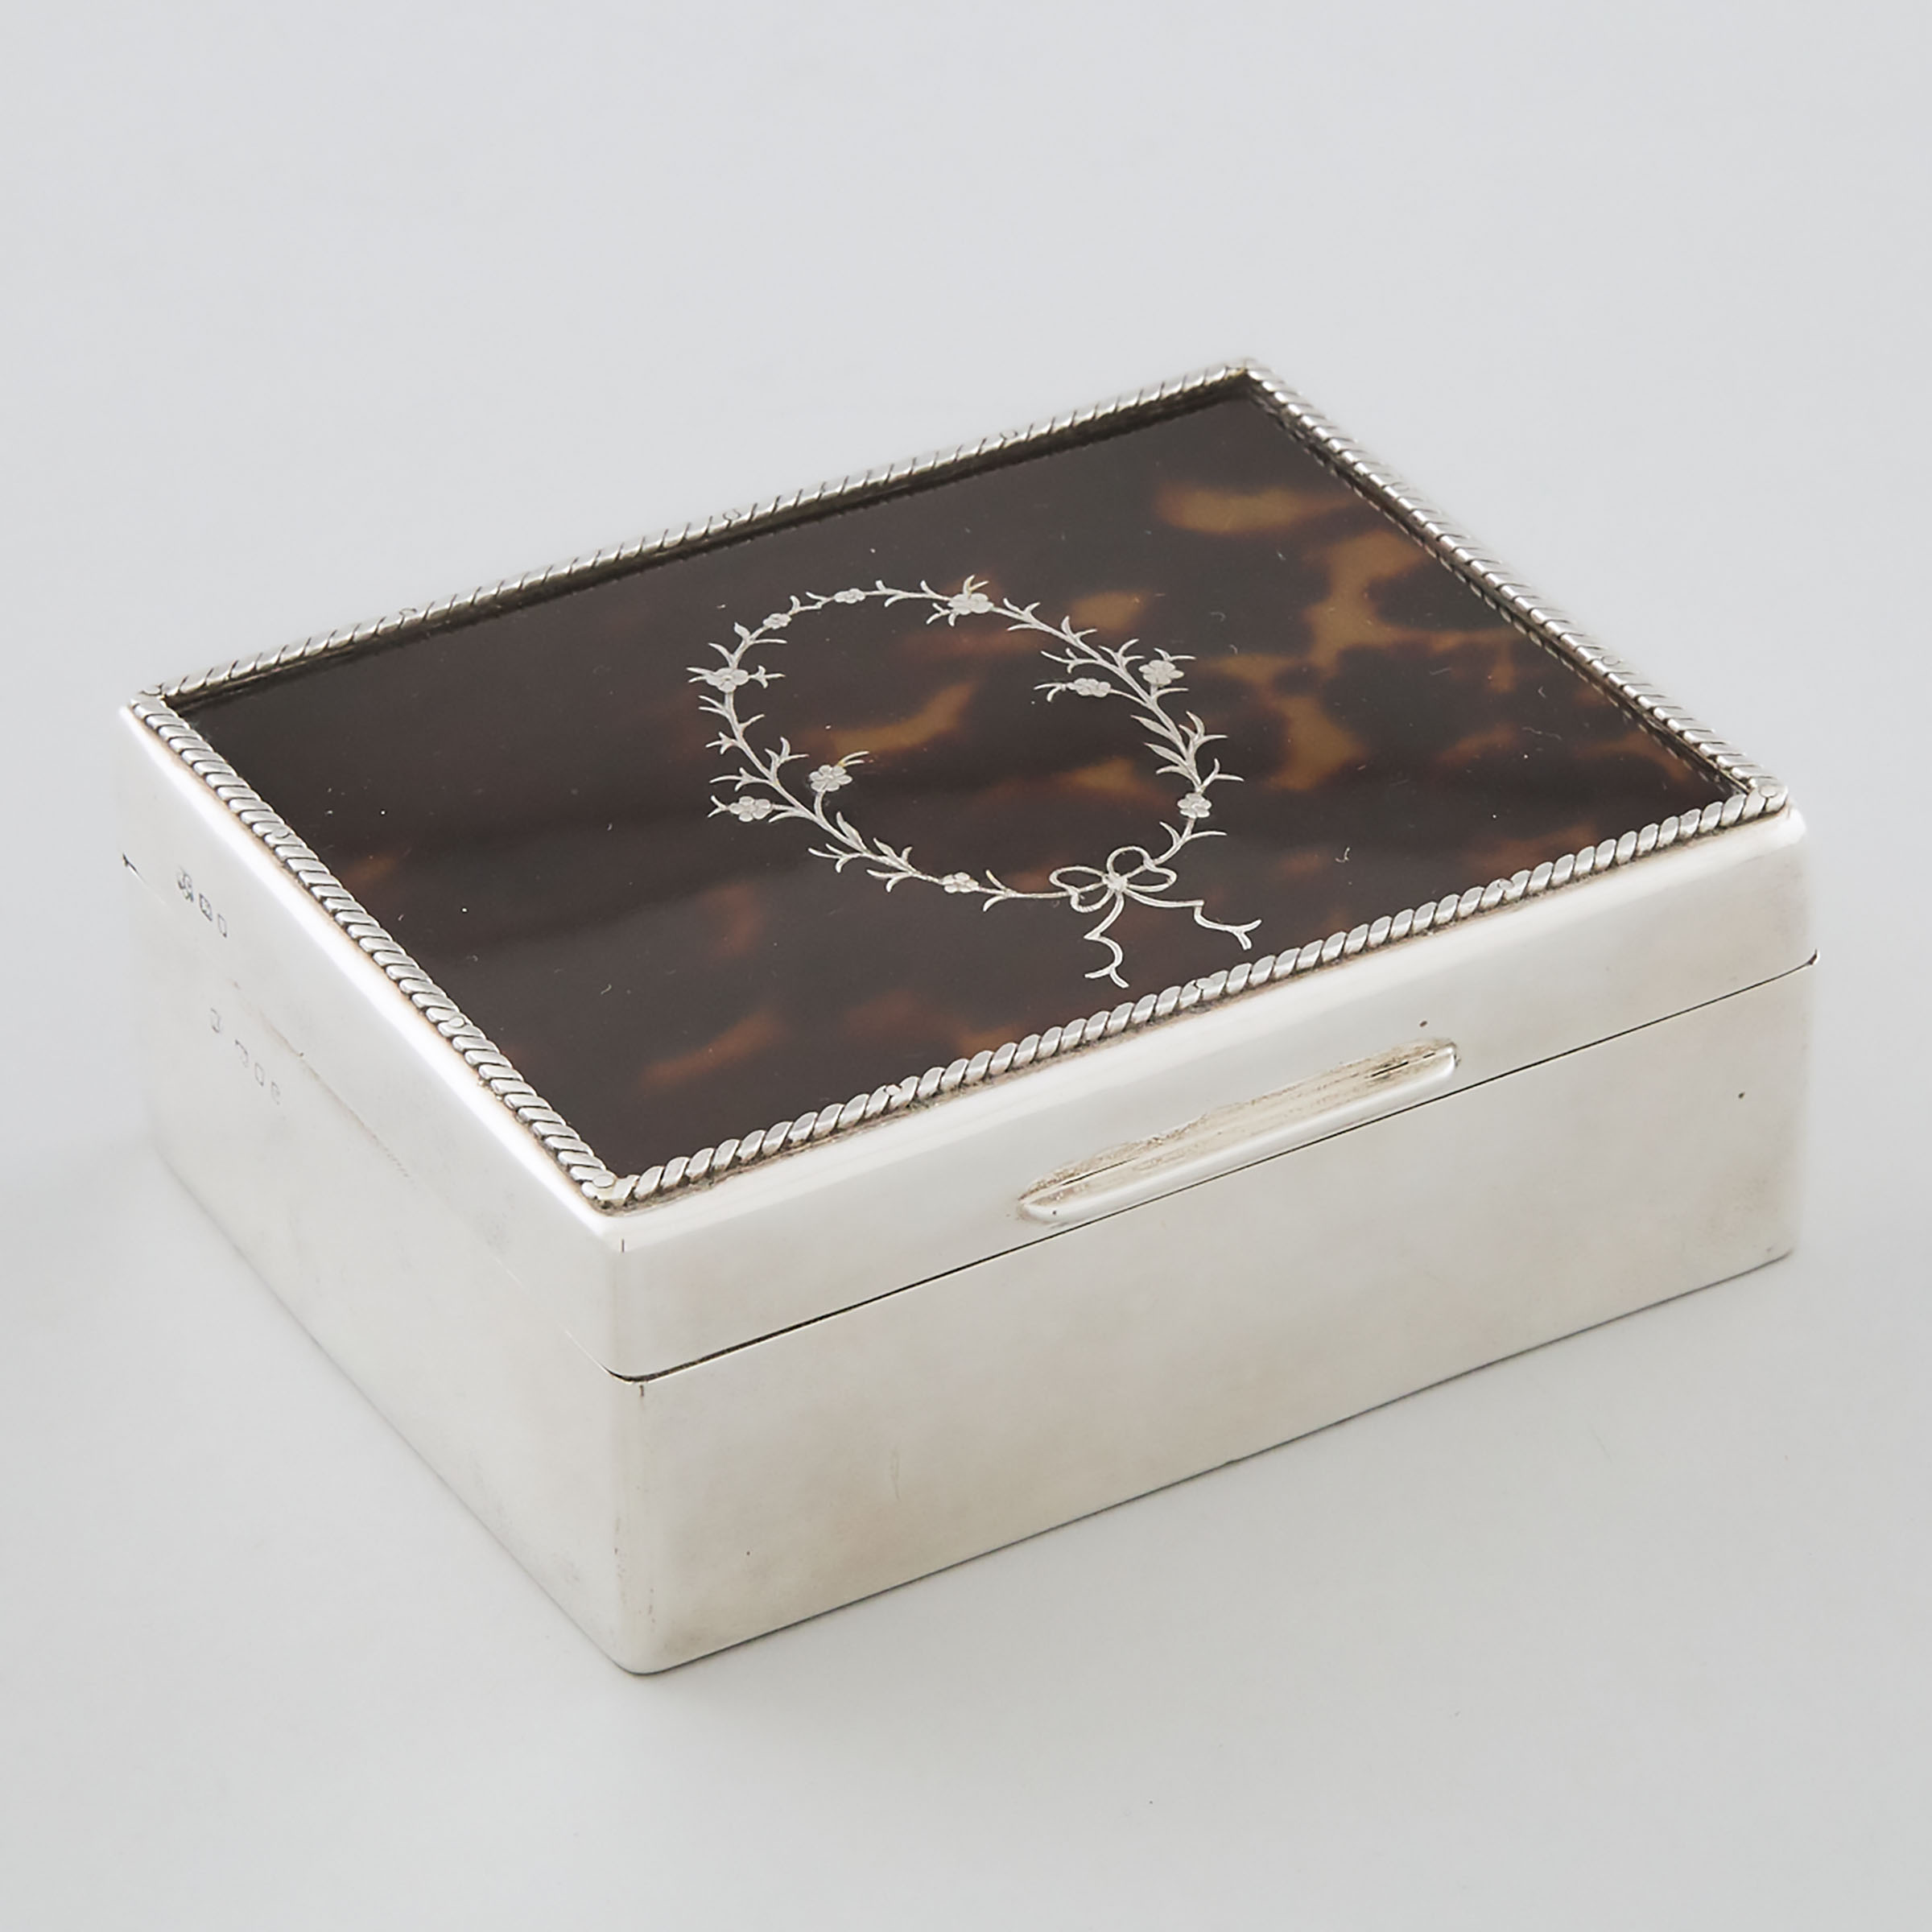 English Silver and Tortoiseshell Rectangular Cigarette Box, William Comyns & Sons, London, 1941